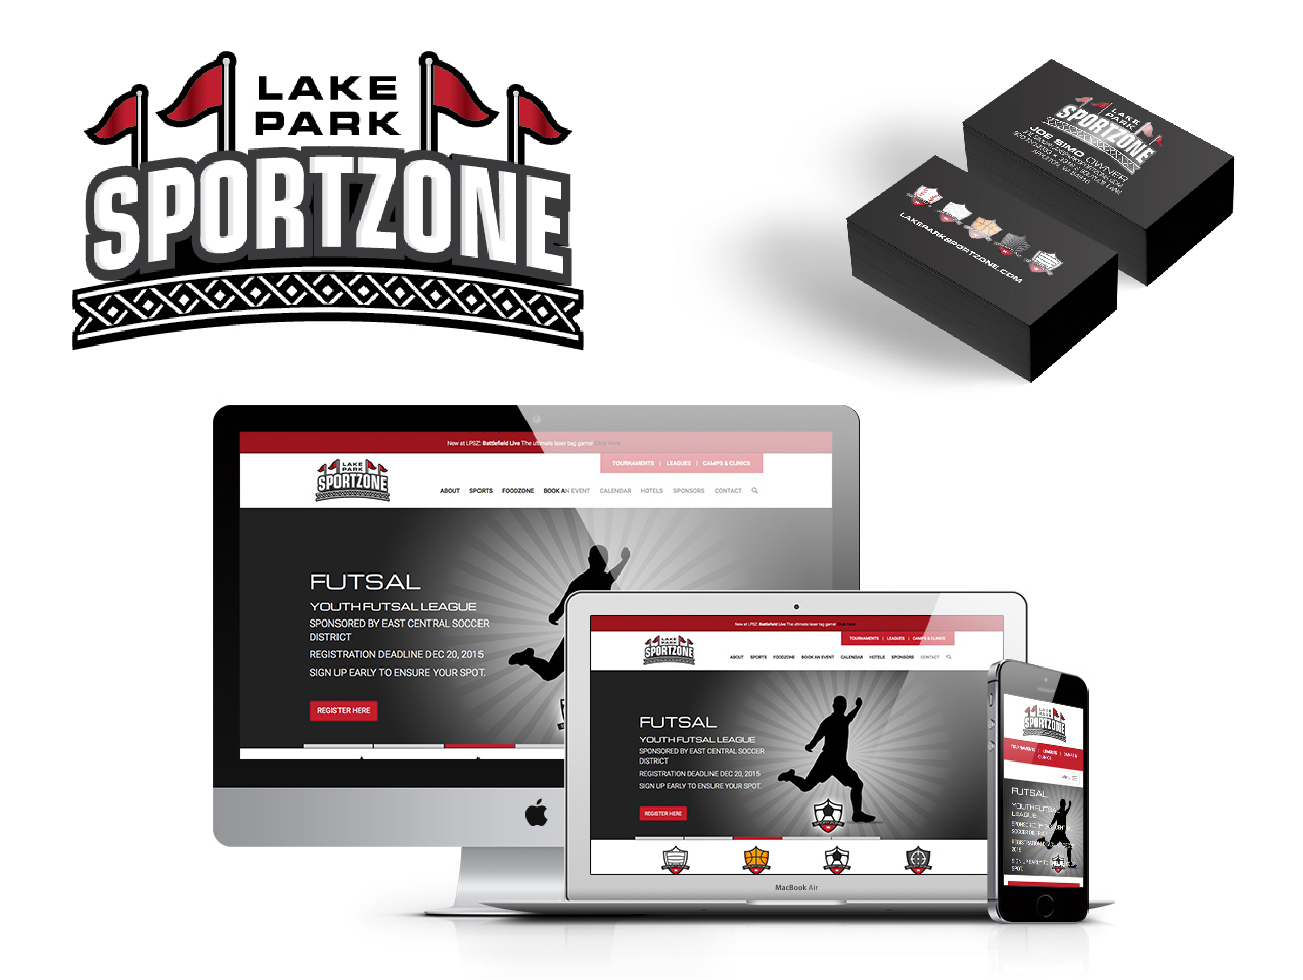 Lake Park Sportzone logo and website